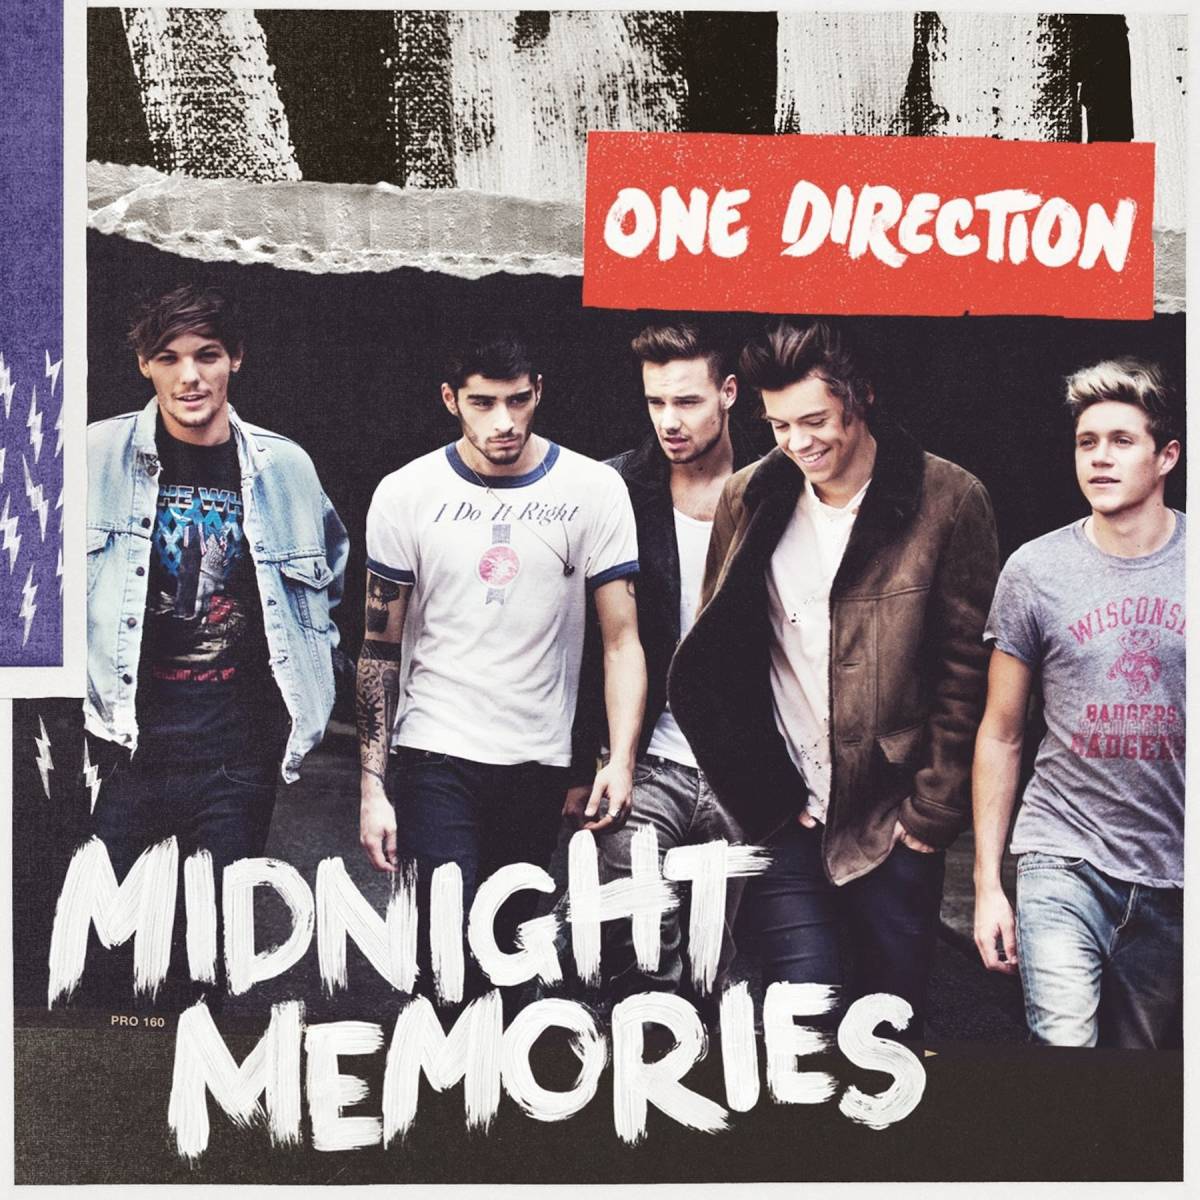 Midnight Memories 是流行的盎格魯-愛爾蘭男孩樂隊 One Direction 的第三個工作室作品。